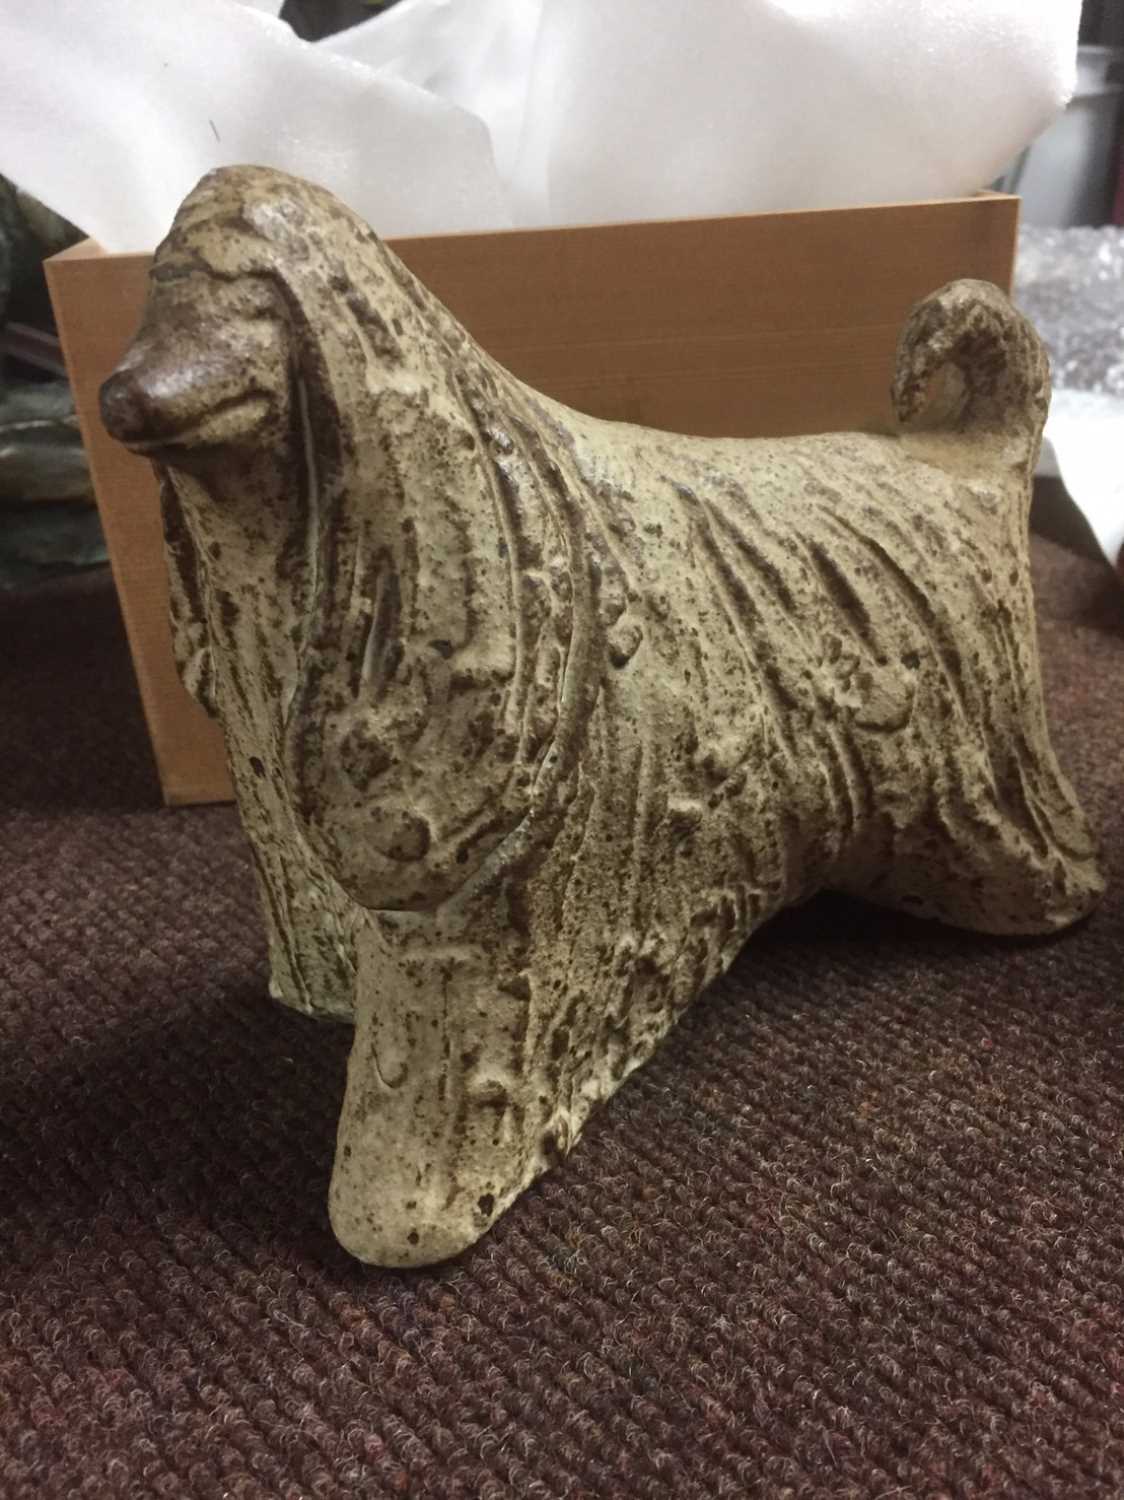 Afghan hound by Minori Terada influenced by the Swedish artist Lisa Larson